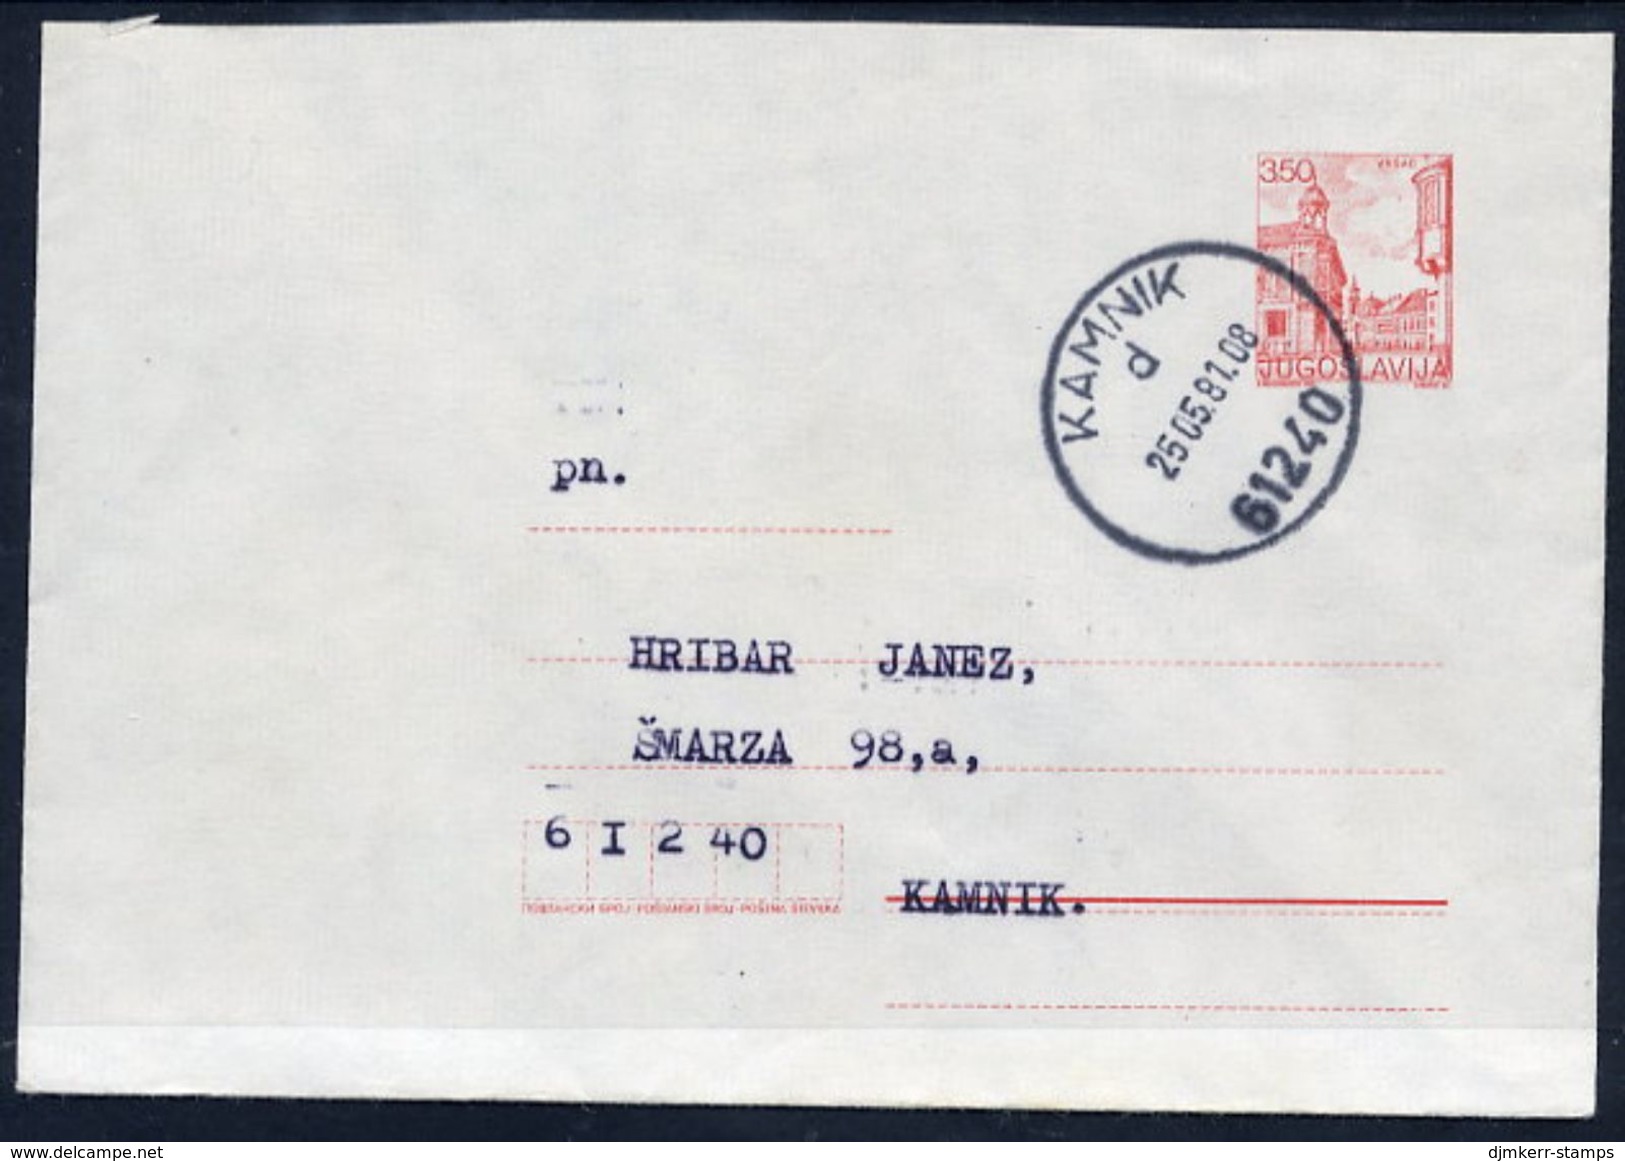 YUGOSLAVIA 1981 Tourism 3.50 D.stationery Envelope Used Without Additional Franking.  Michel U63 - Postal Stationery